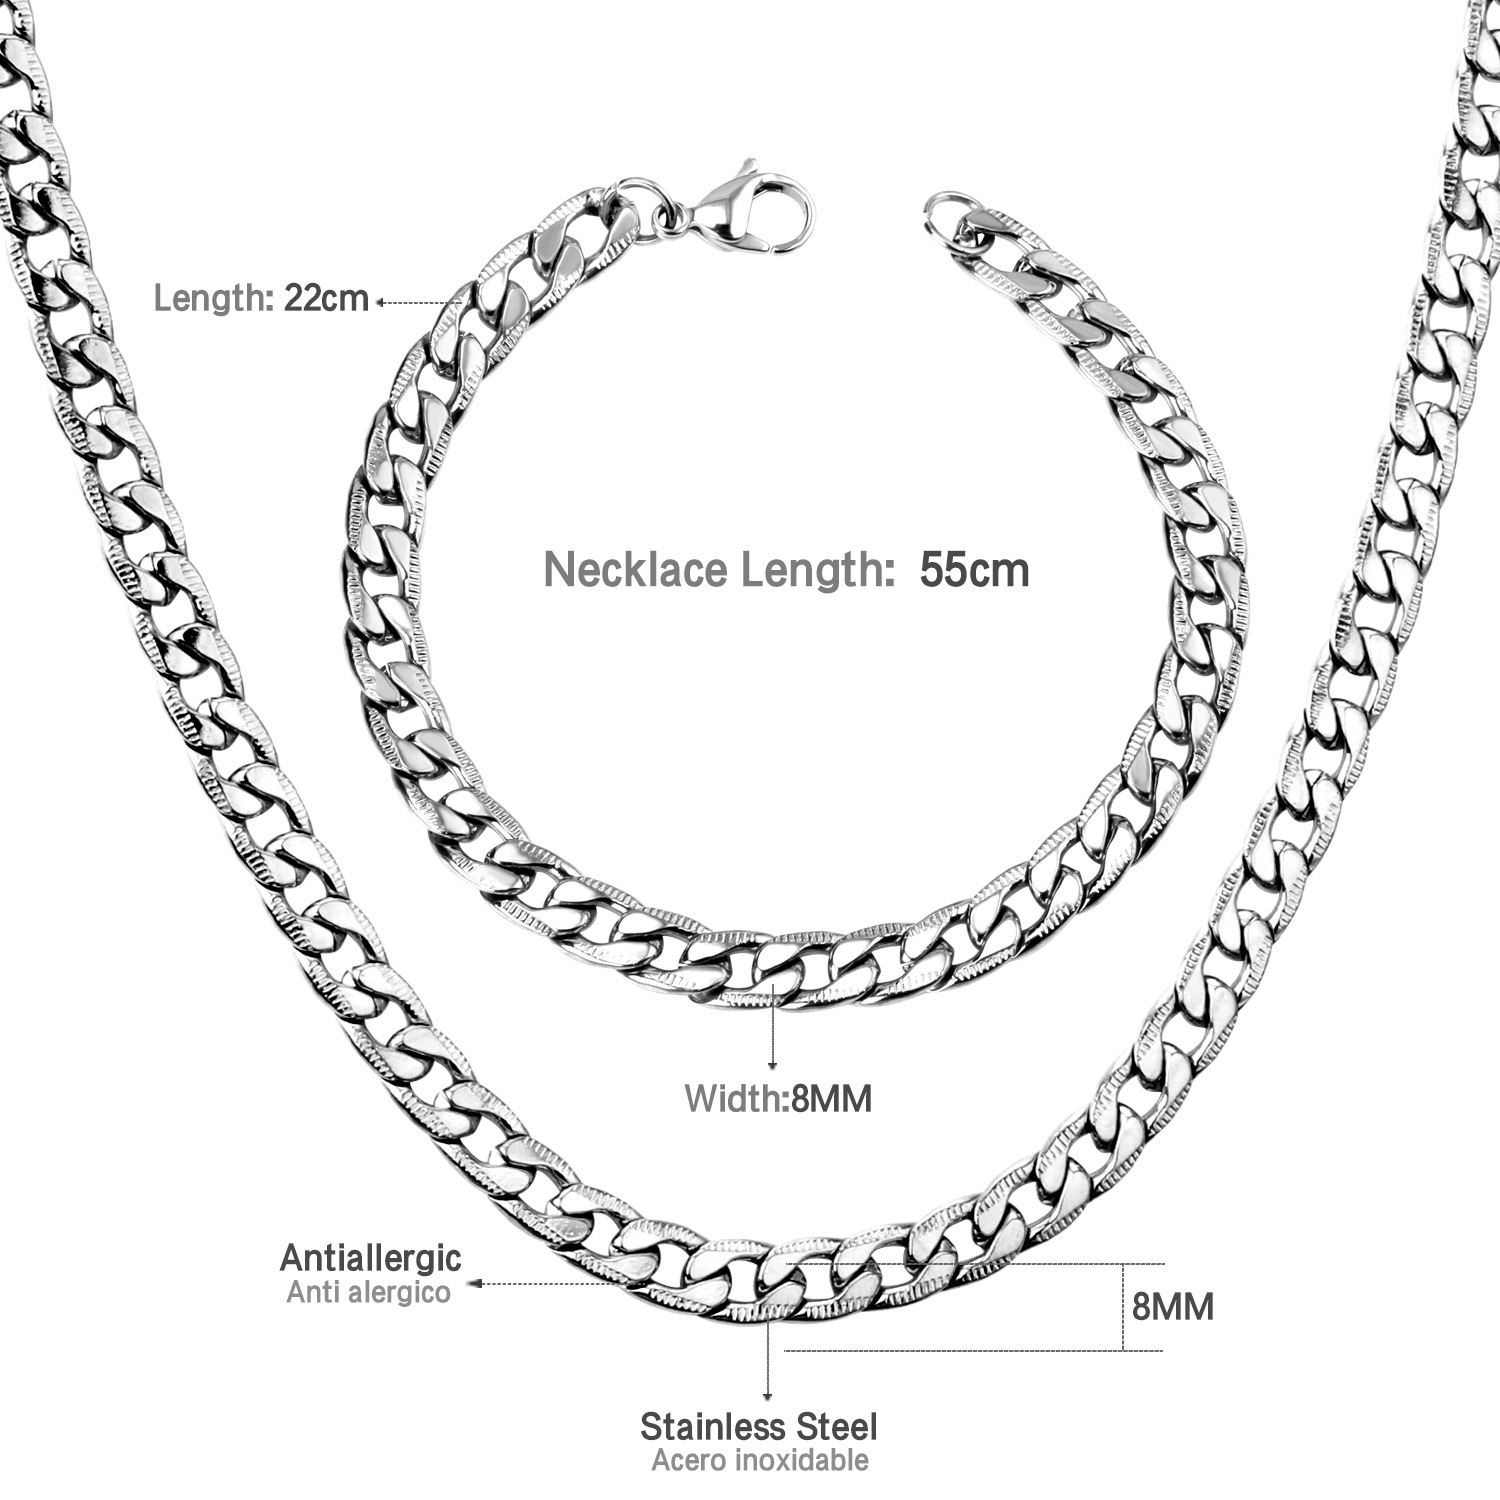 2:Steel Necklace 55cm